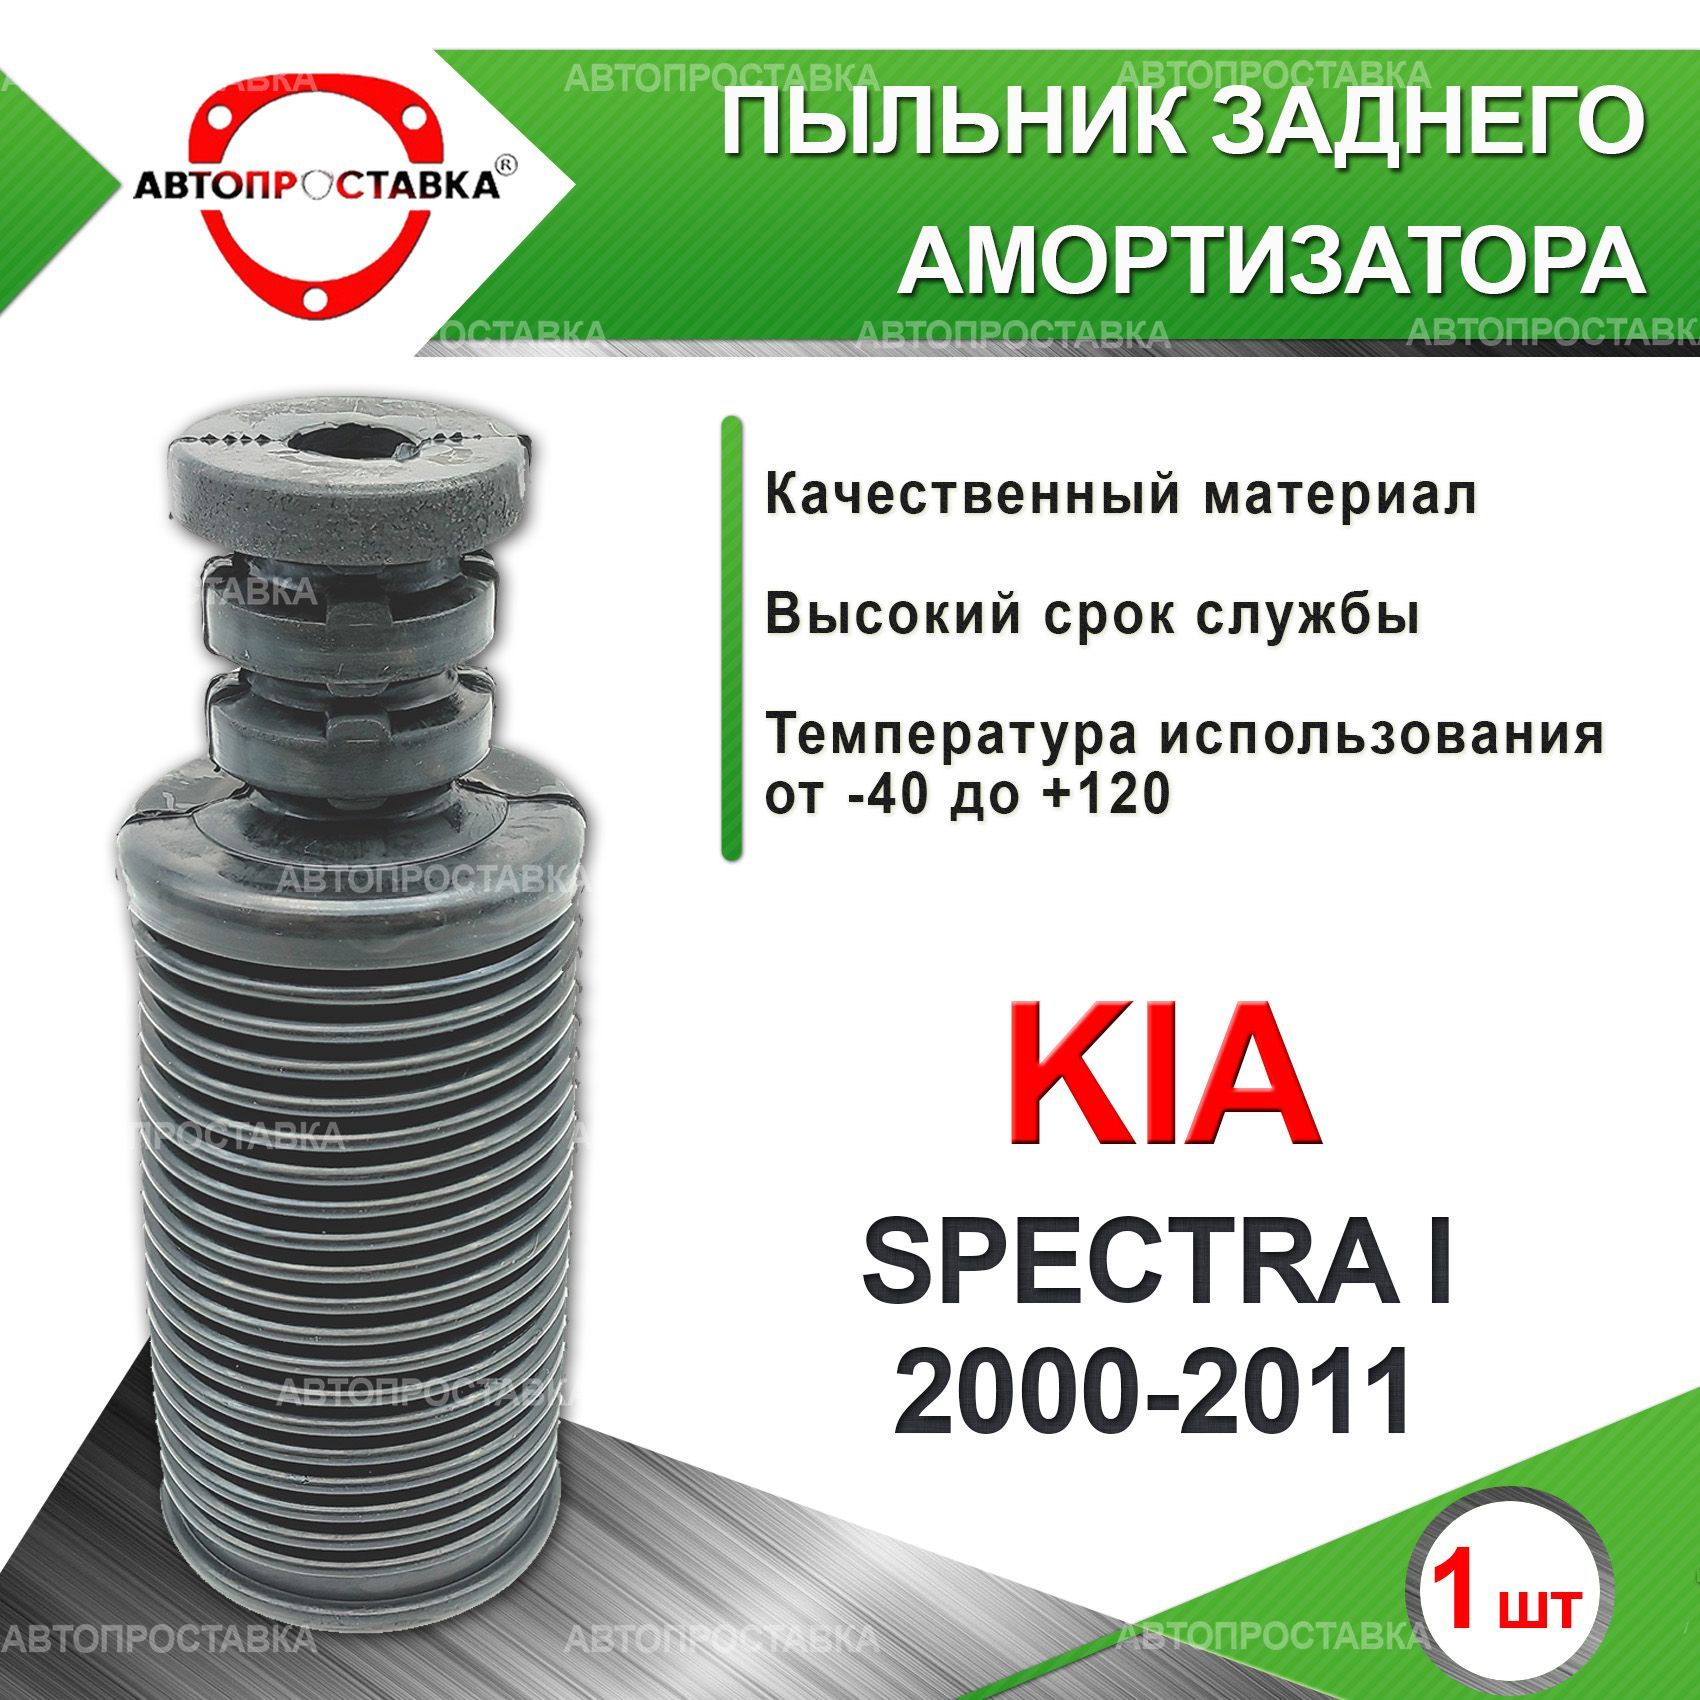     Kia SPECTRA I CDLDLS 2000-2011          d-20  1    -      - OZON  765807437